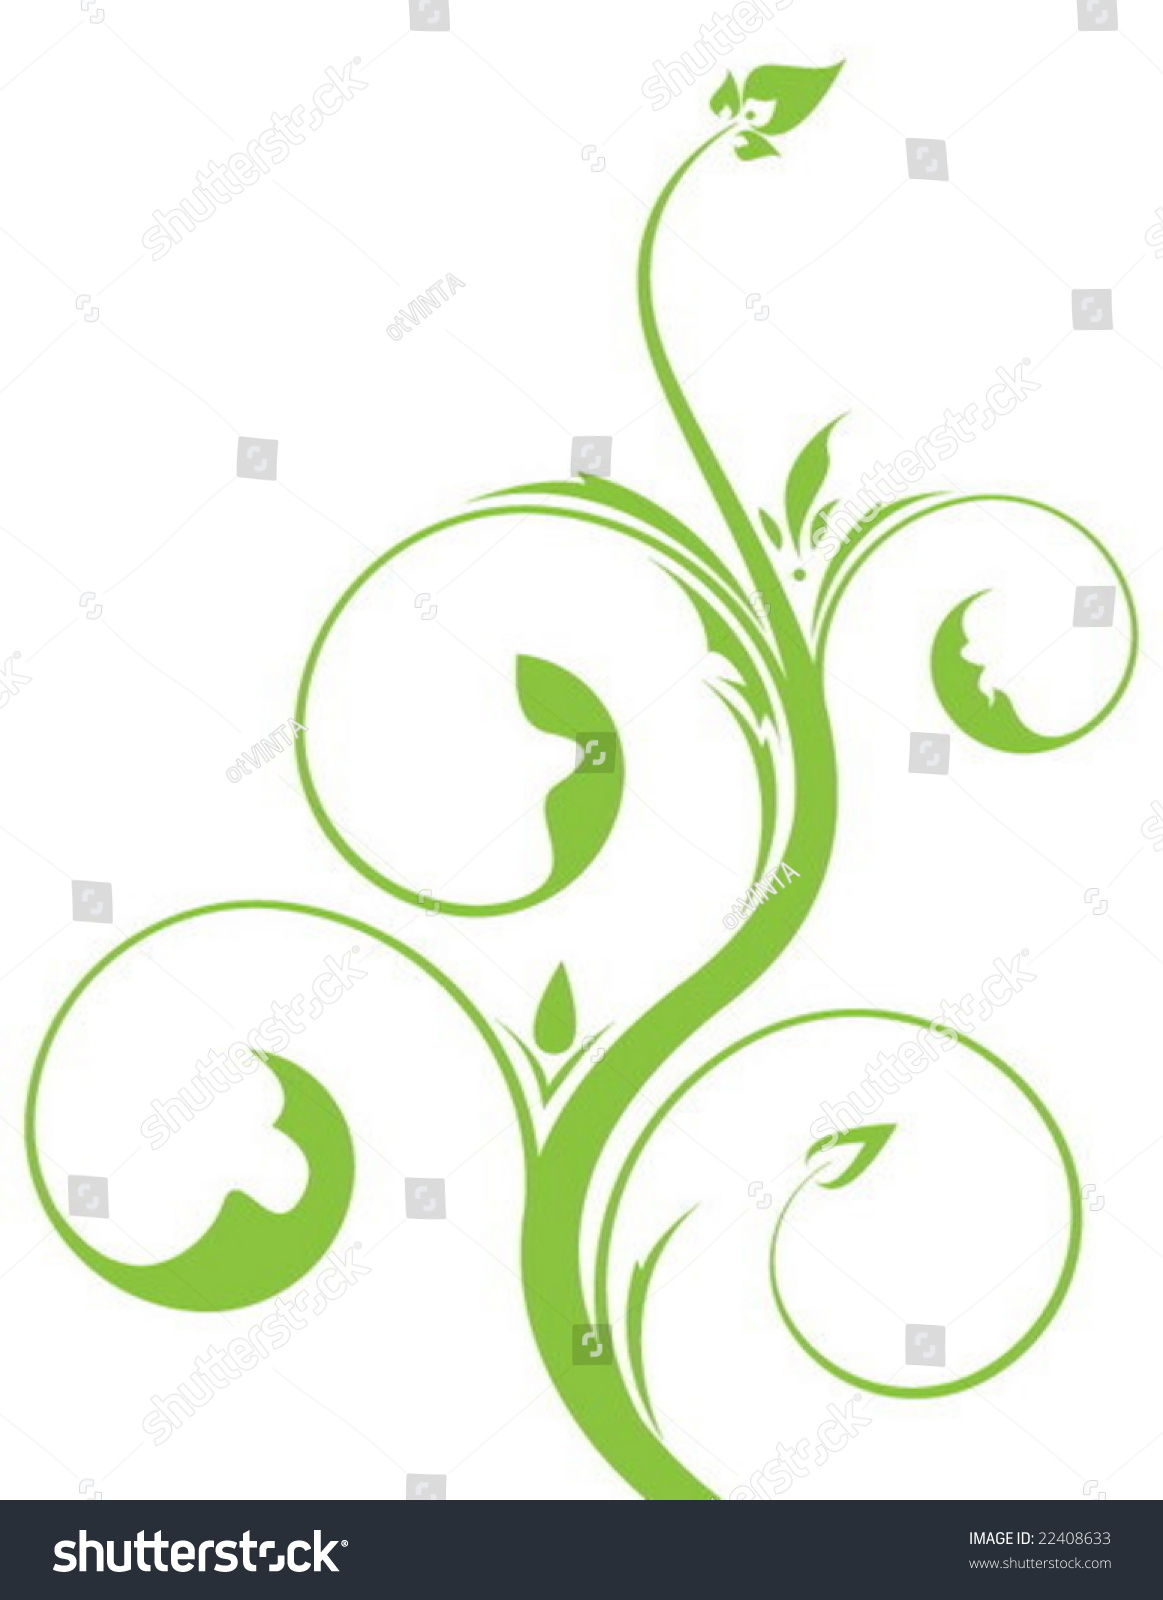 Floral Tree Stock Vector 22408633 - Shutterstock